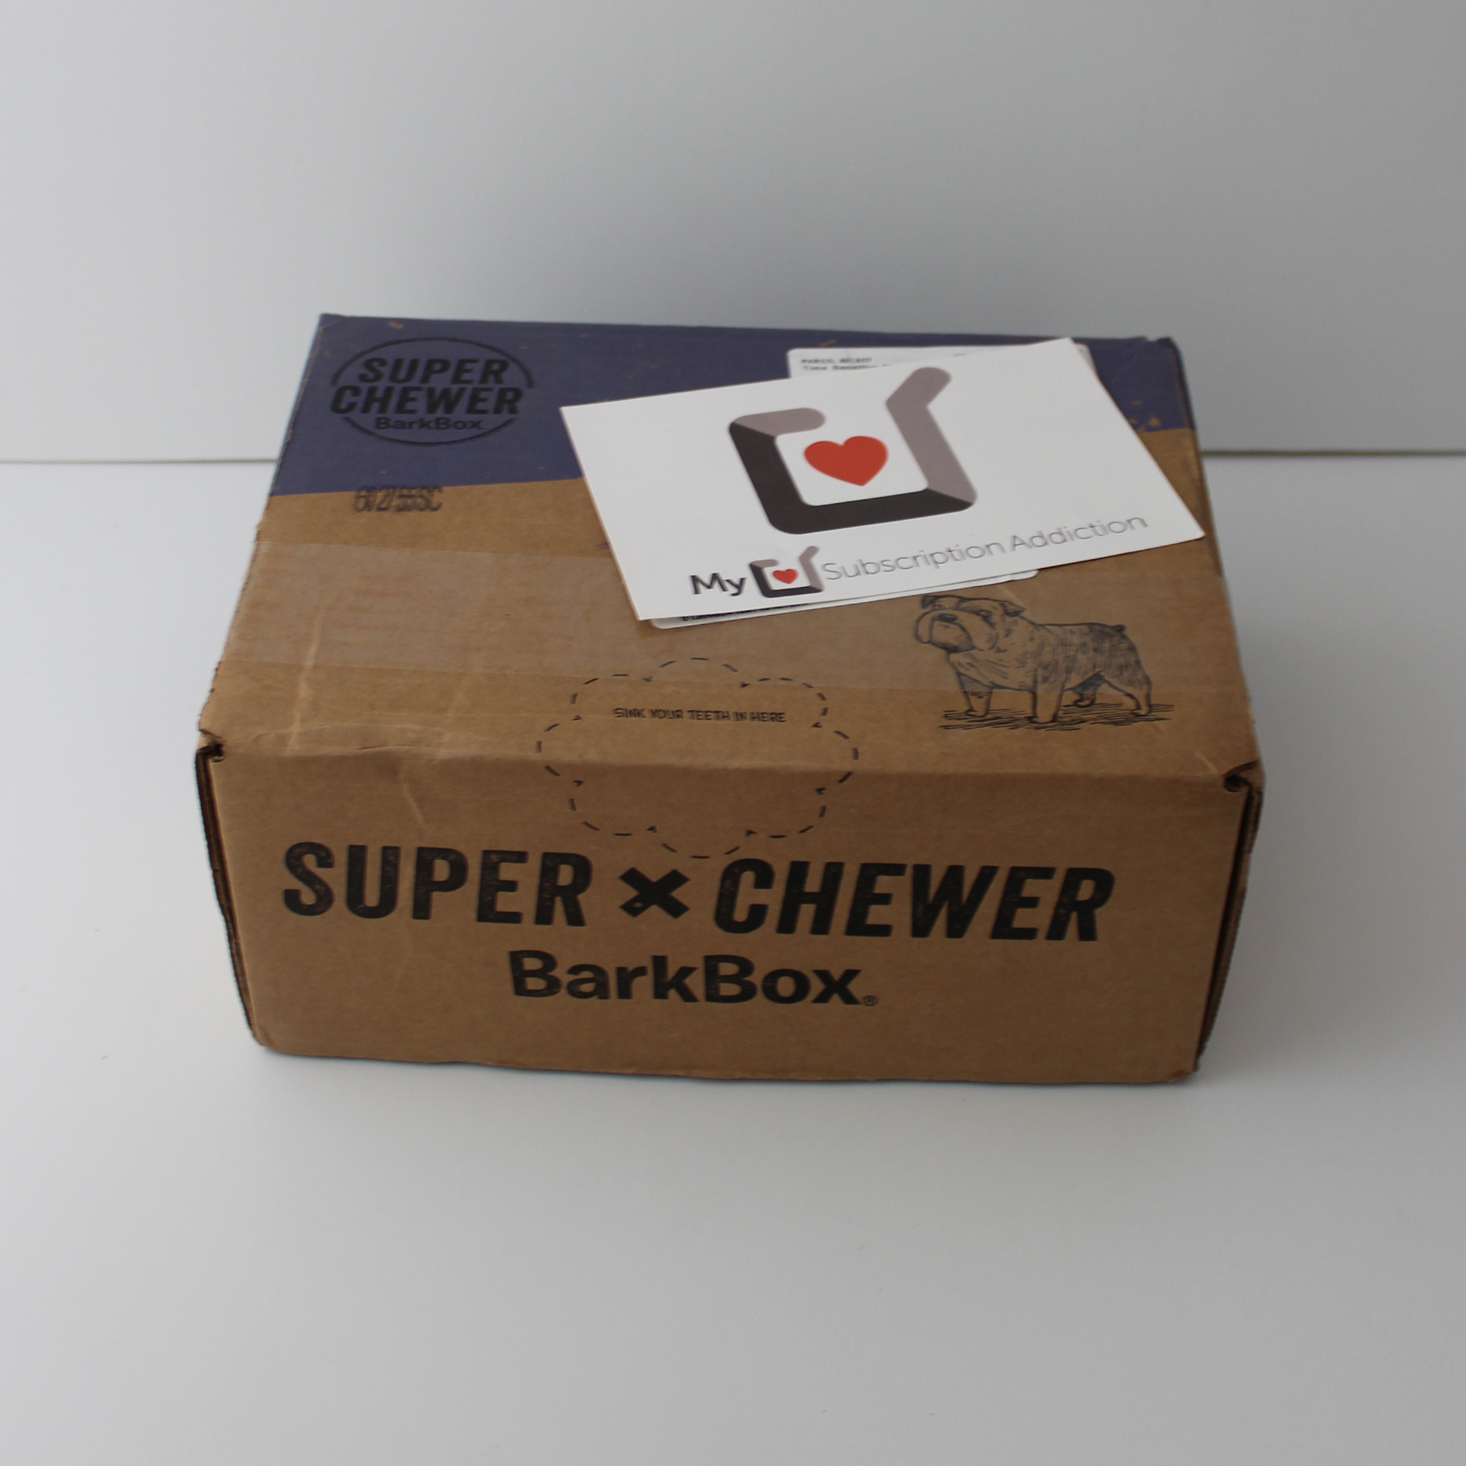 Super Chewer Box Review + Coupon – May 2018